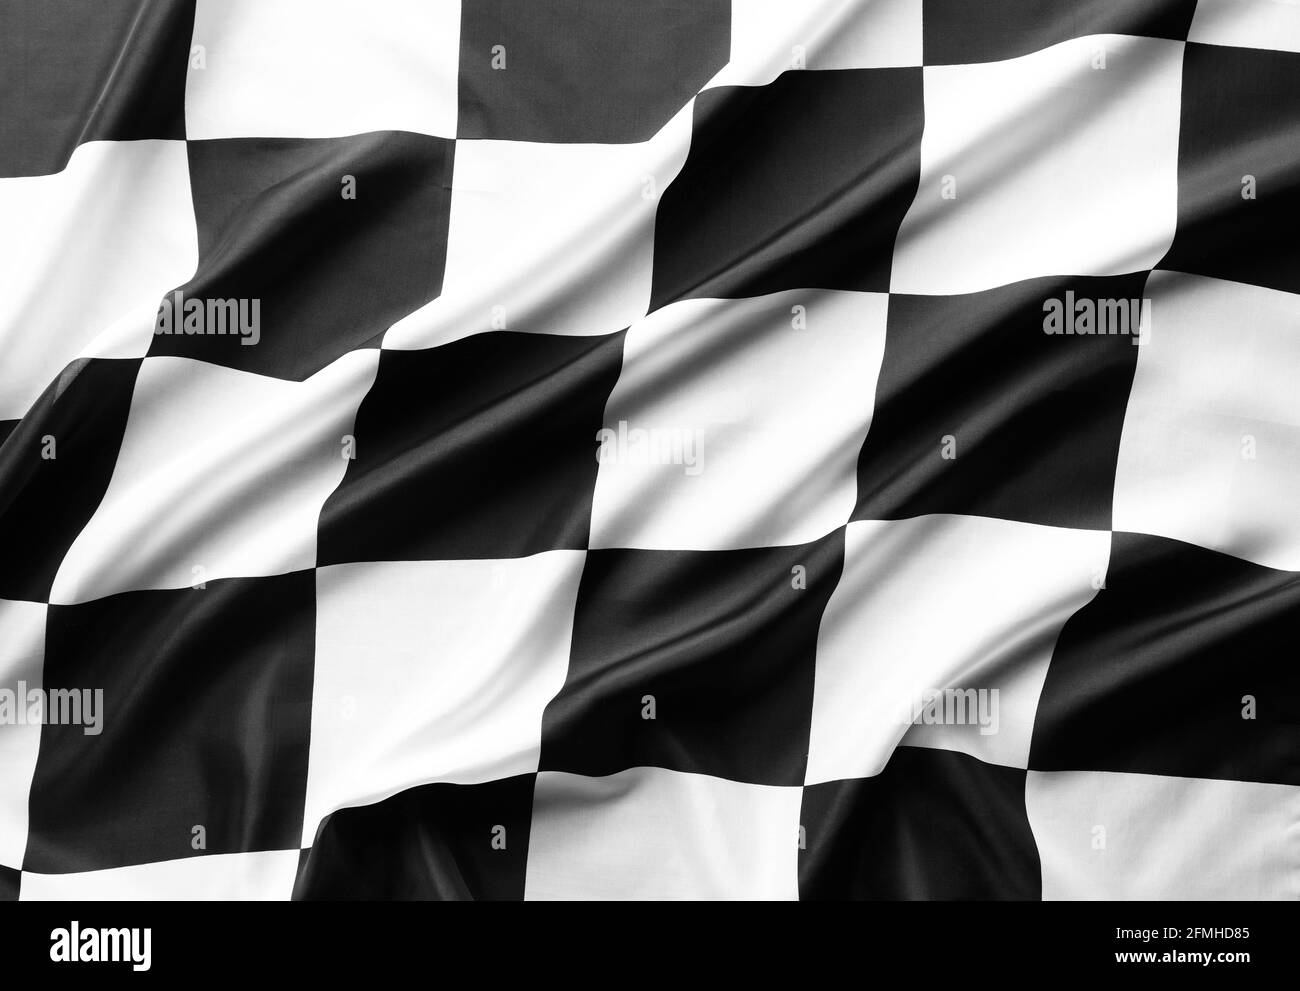  ayvcxui Brown and Black Plaid Race Checkered Flag